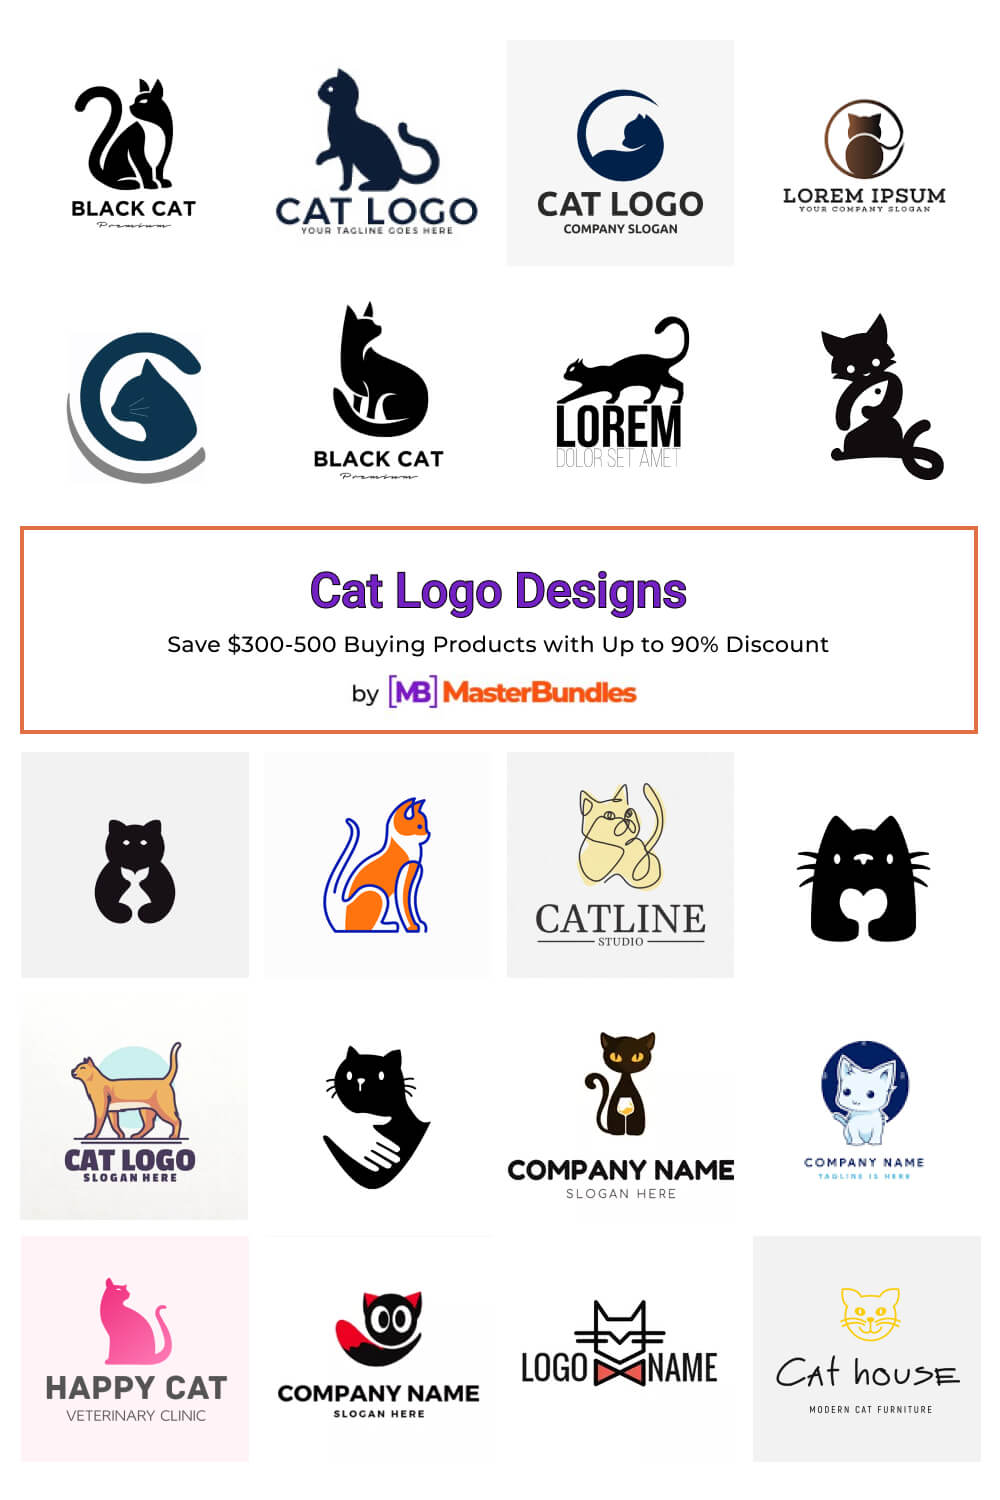 cat logo designs pinterest image.